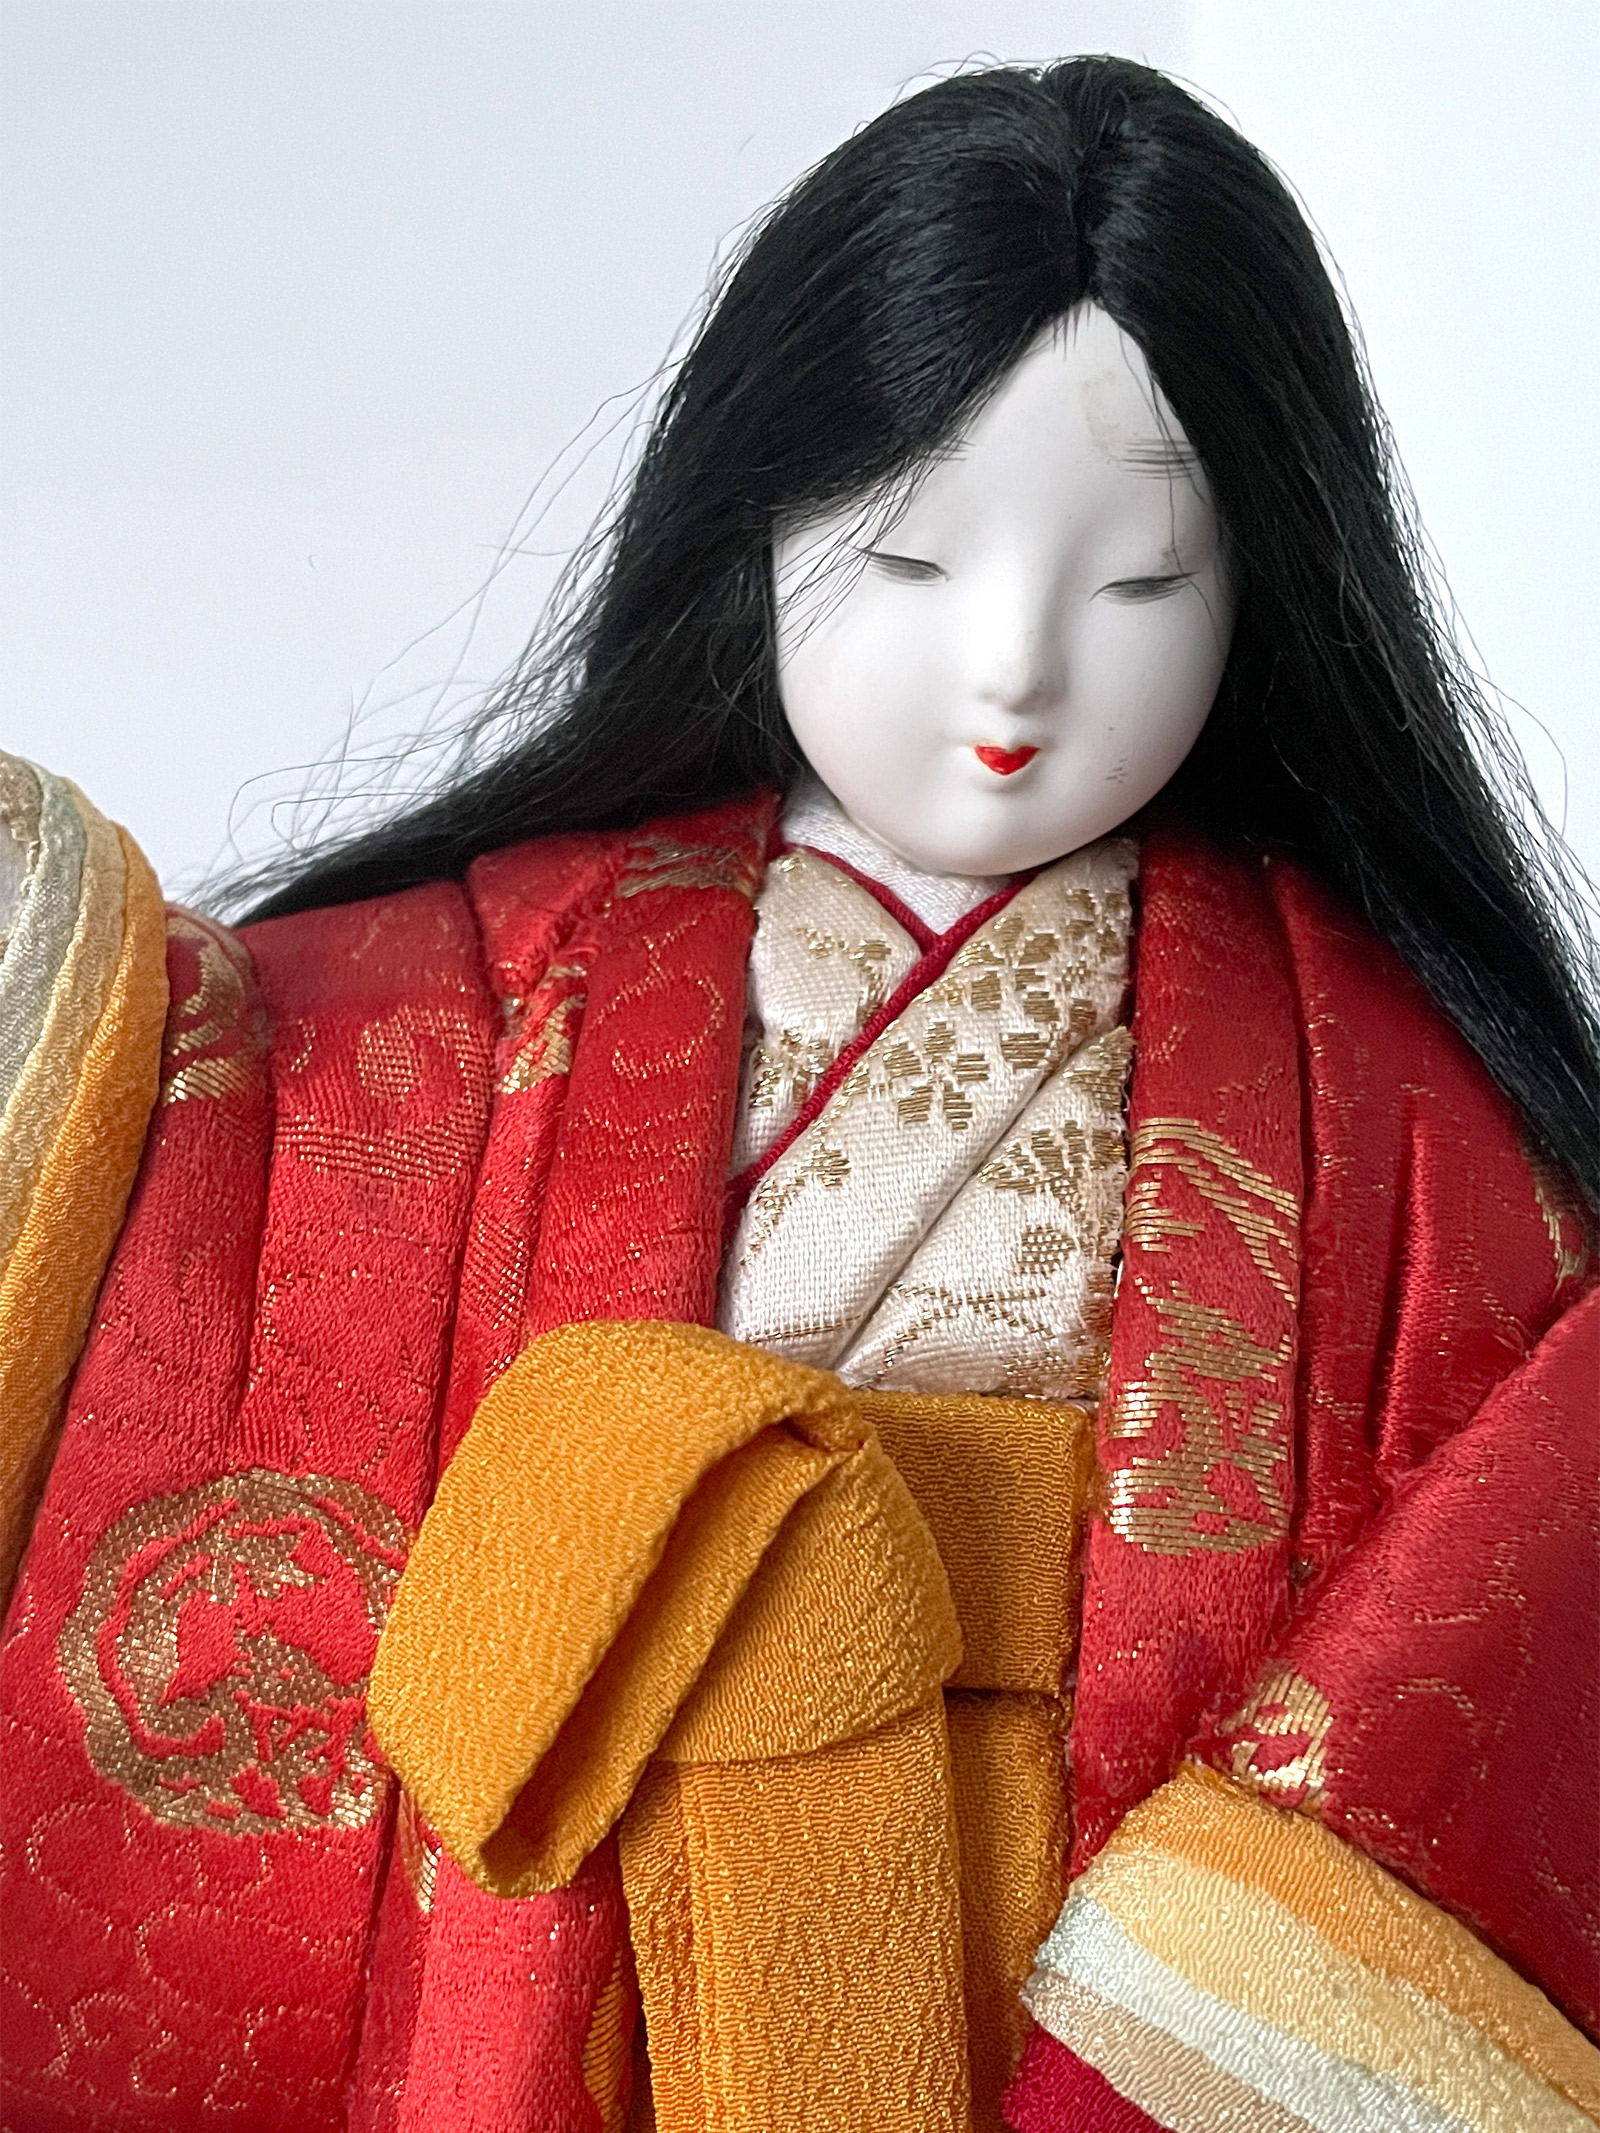 Silk imperiall doll in red Kimono